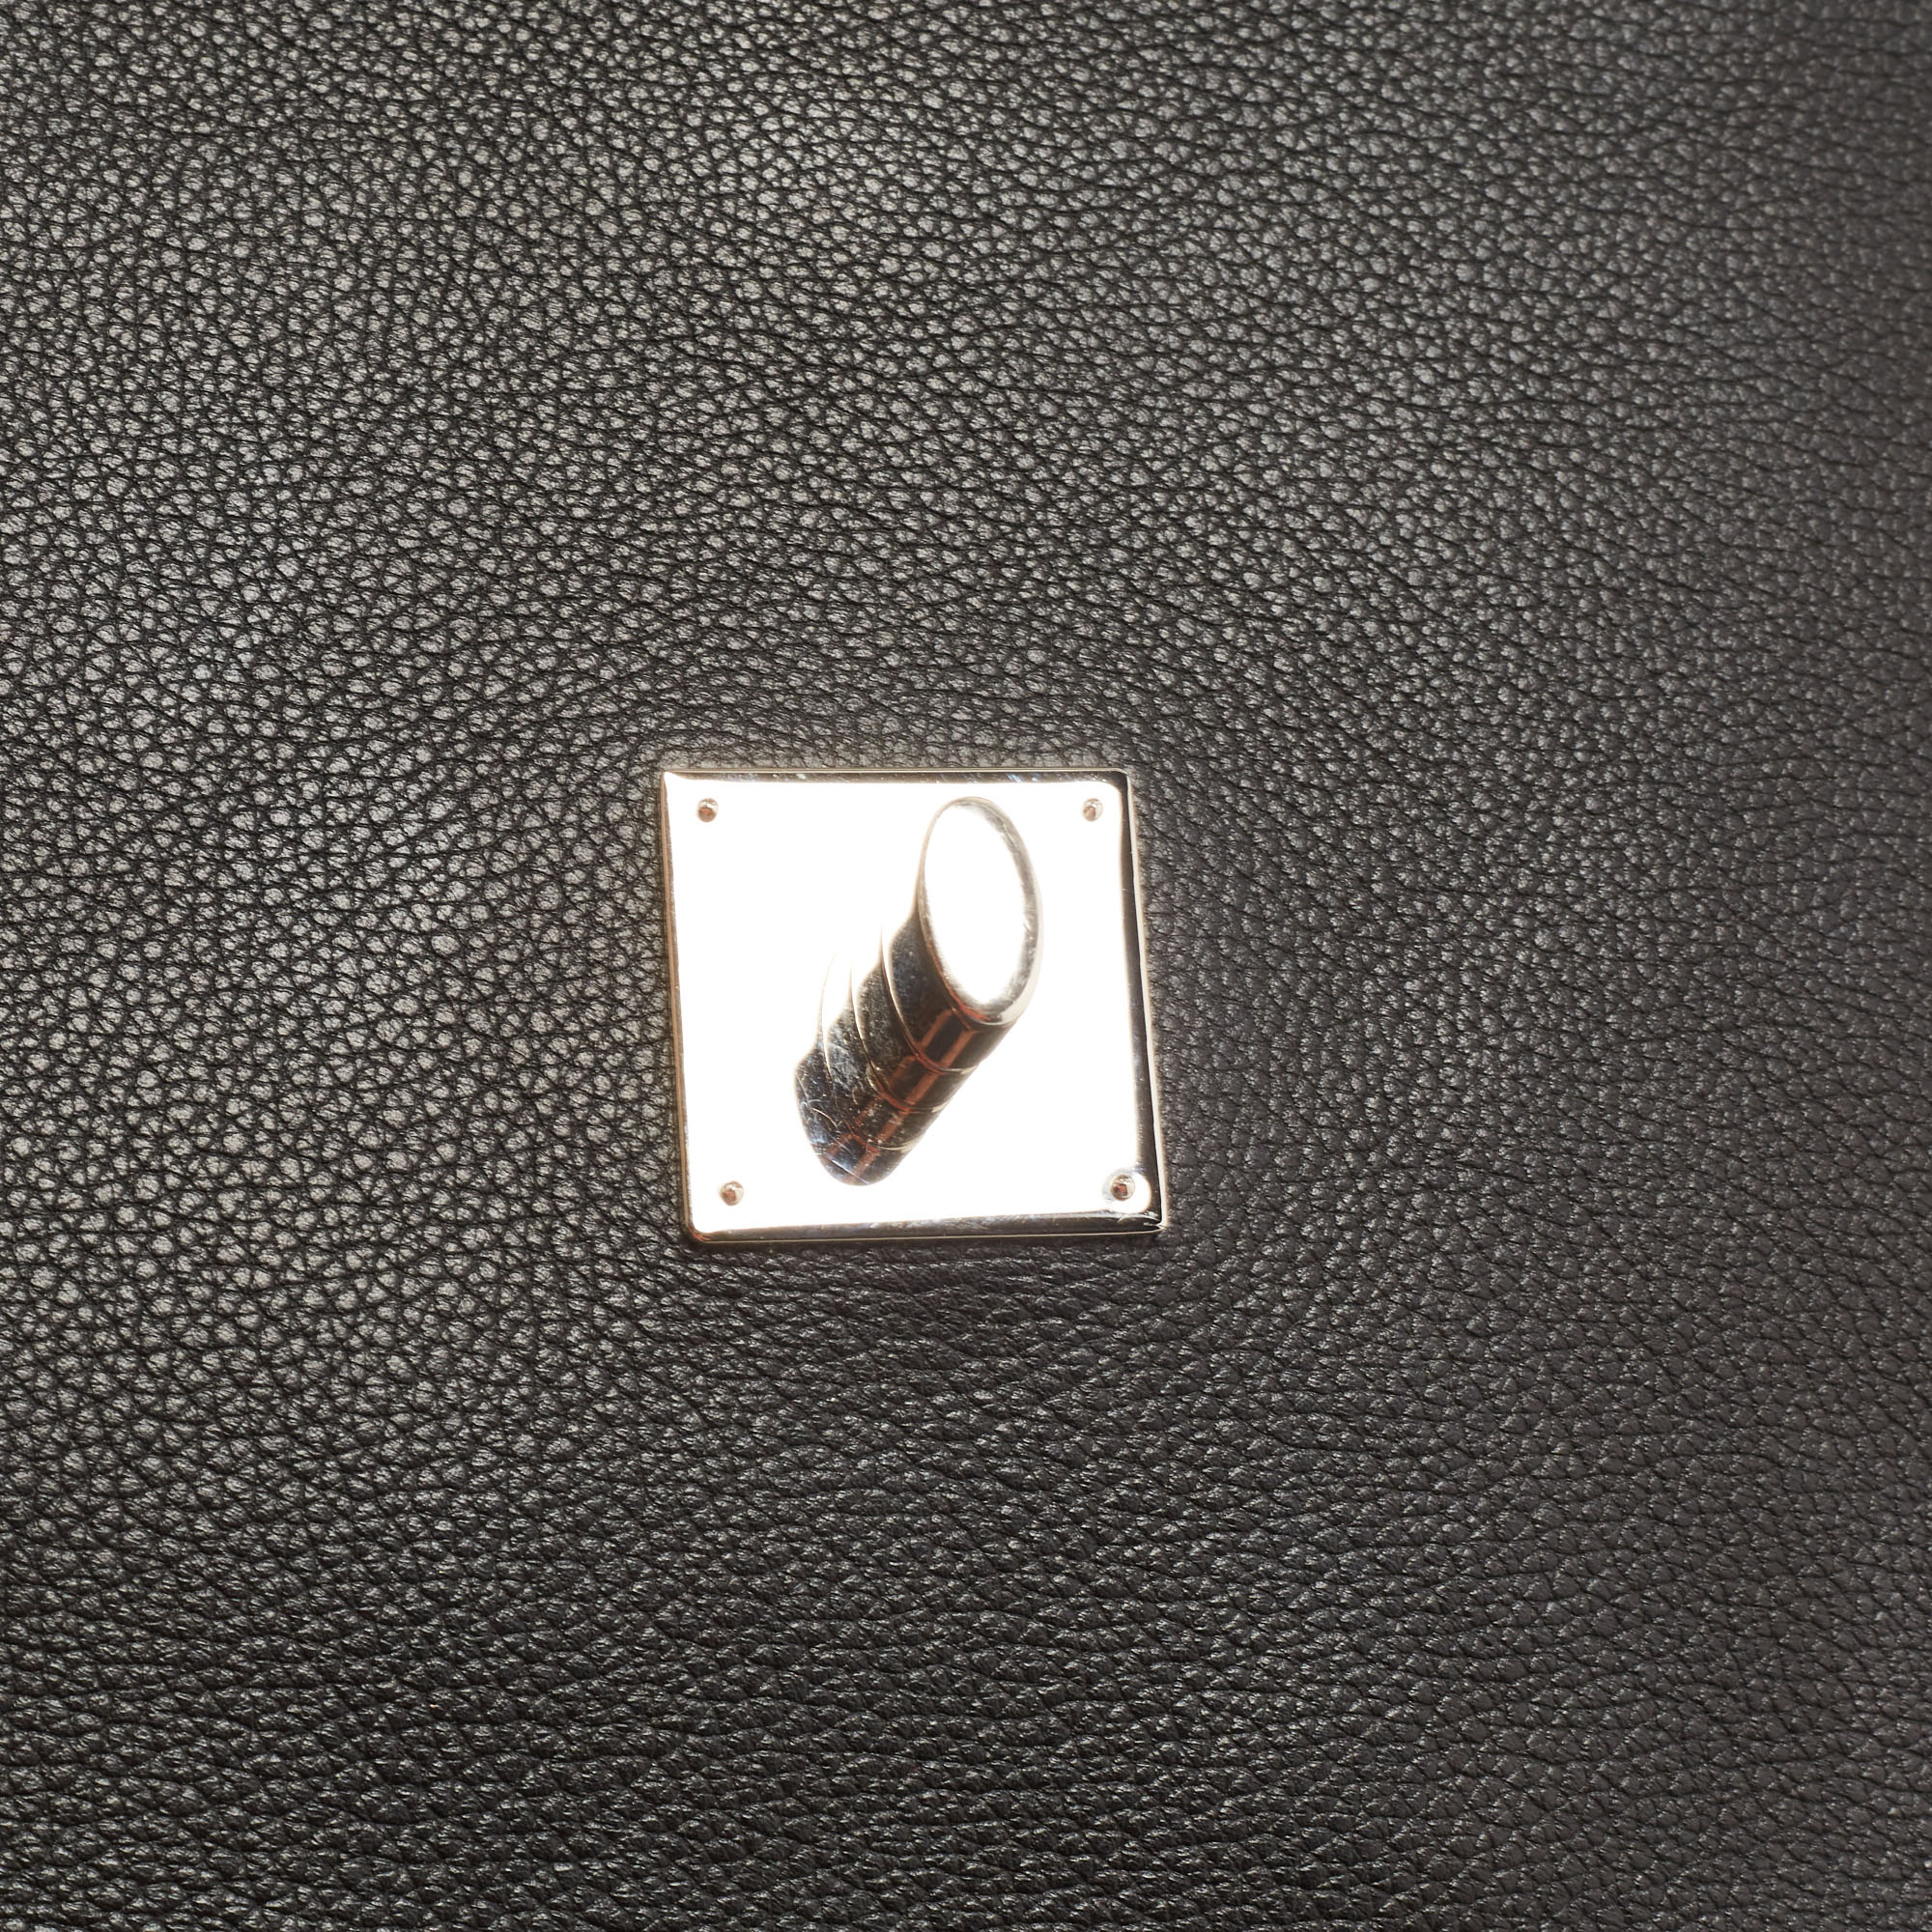 Louis Vuitton Black Leather Lockme II Top Handle Bag